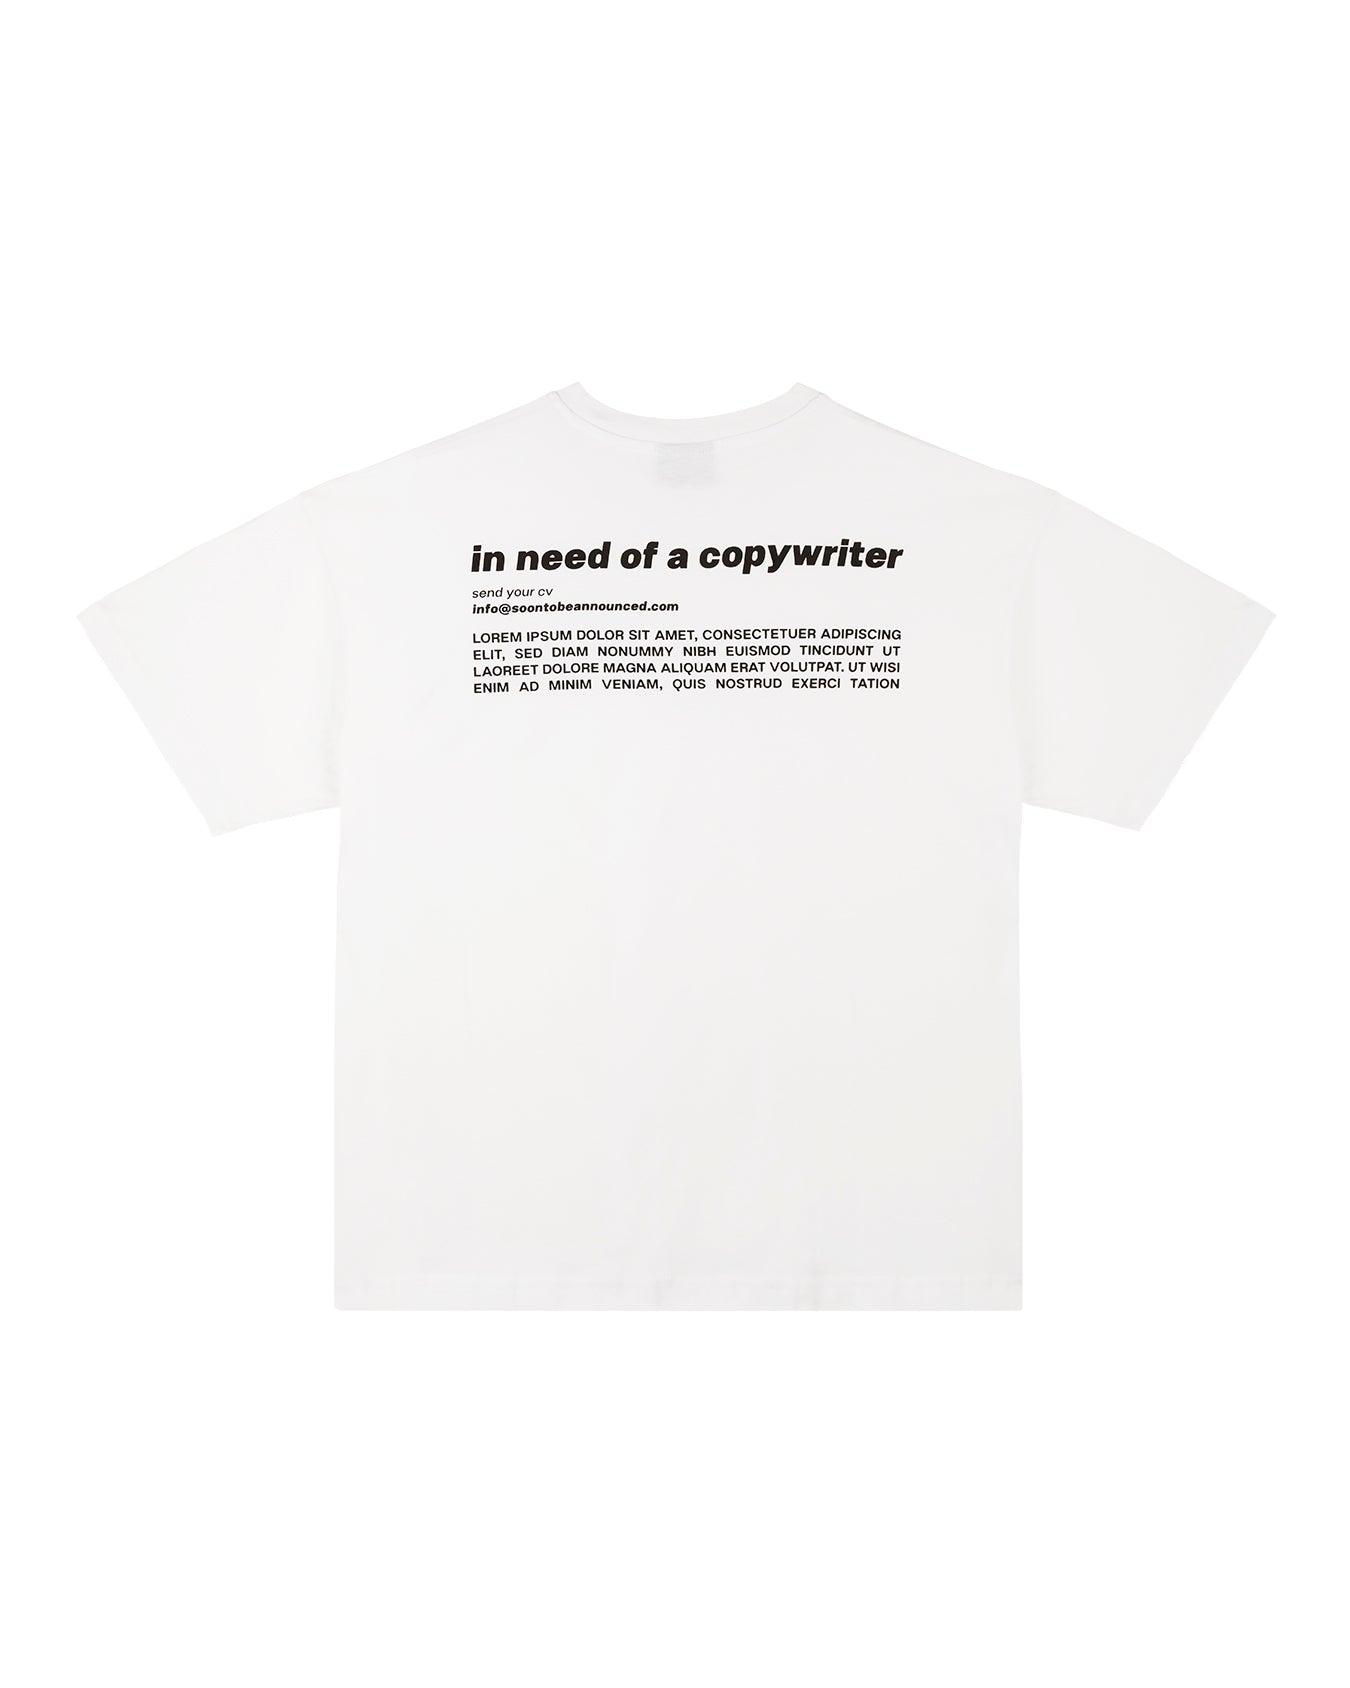 Copywriter T-Shirt - SOON TO BE ANNOUNCED